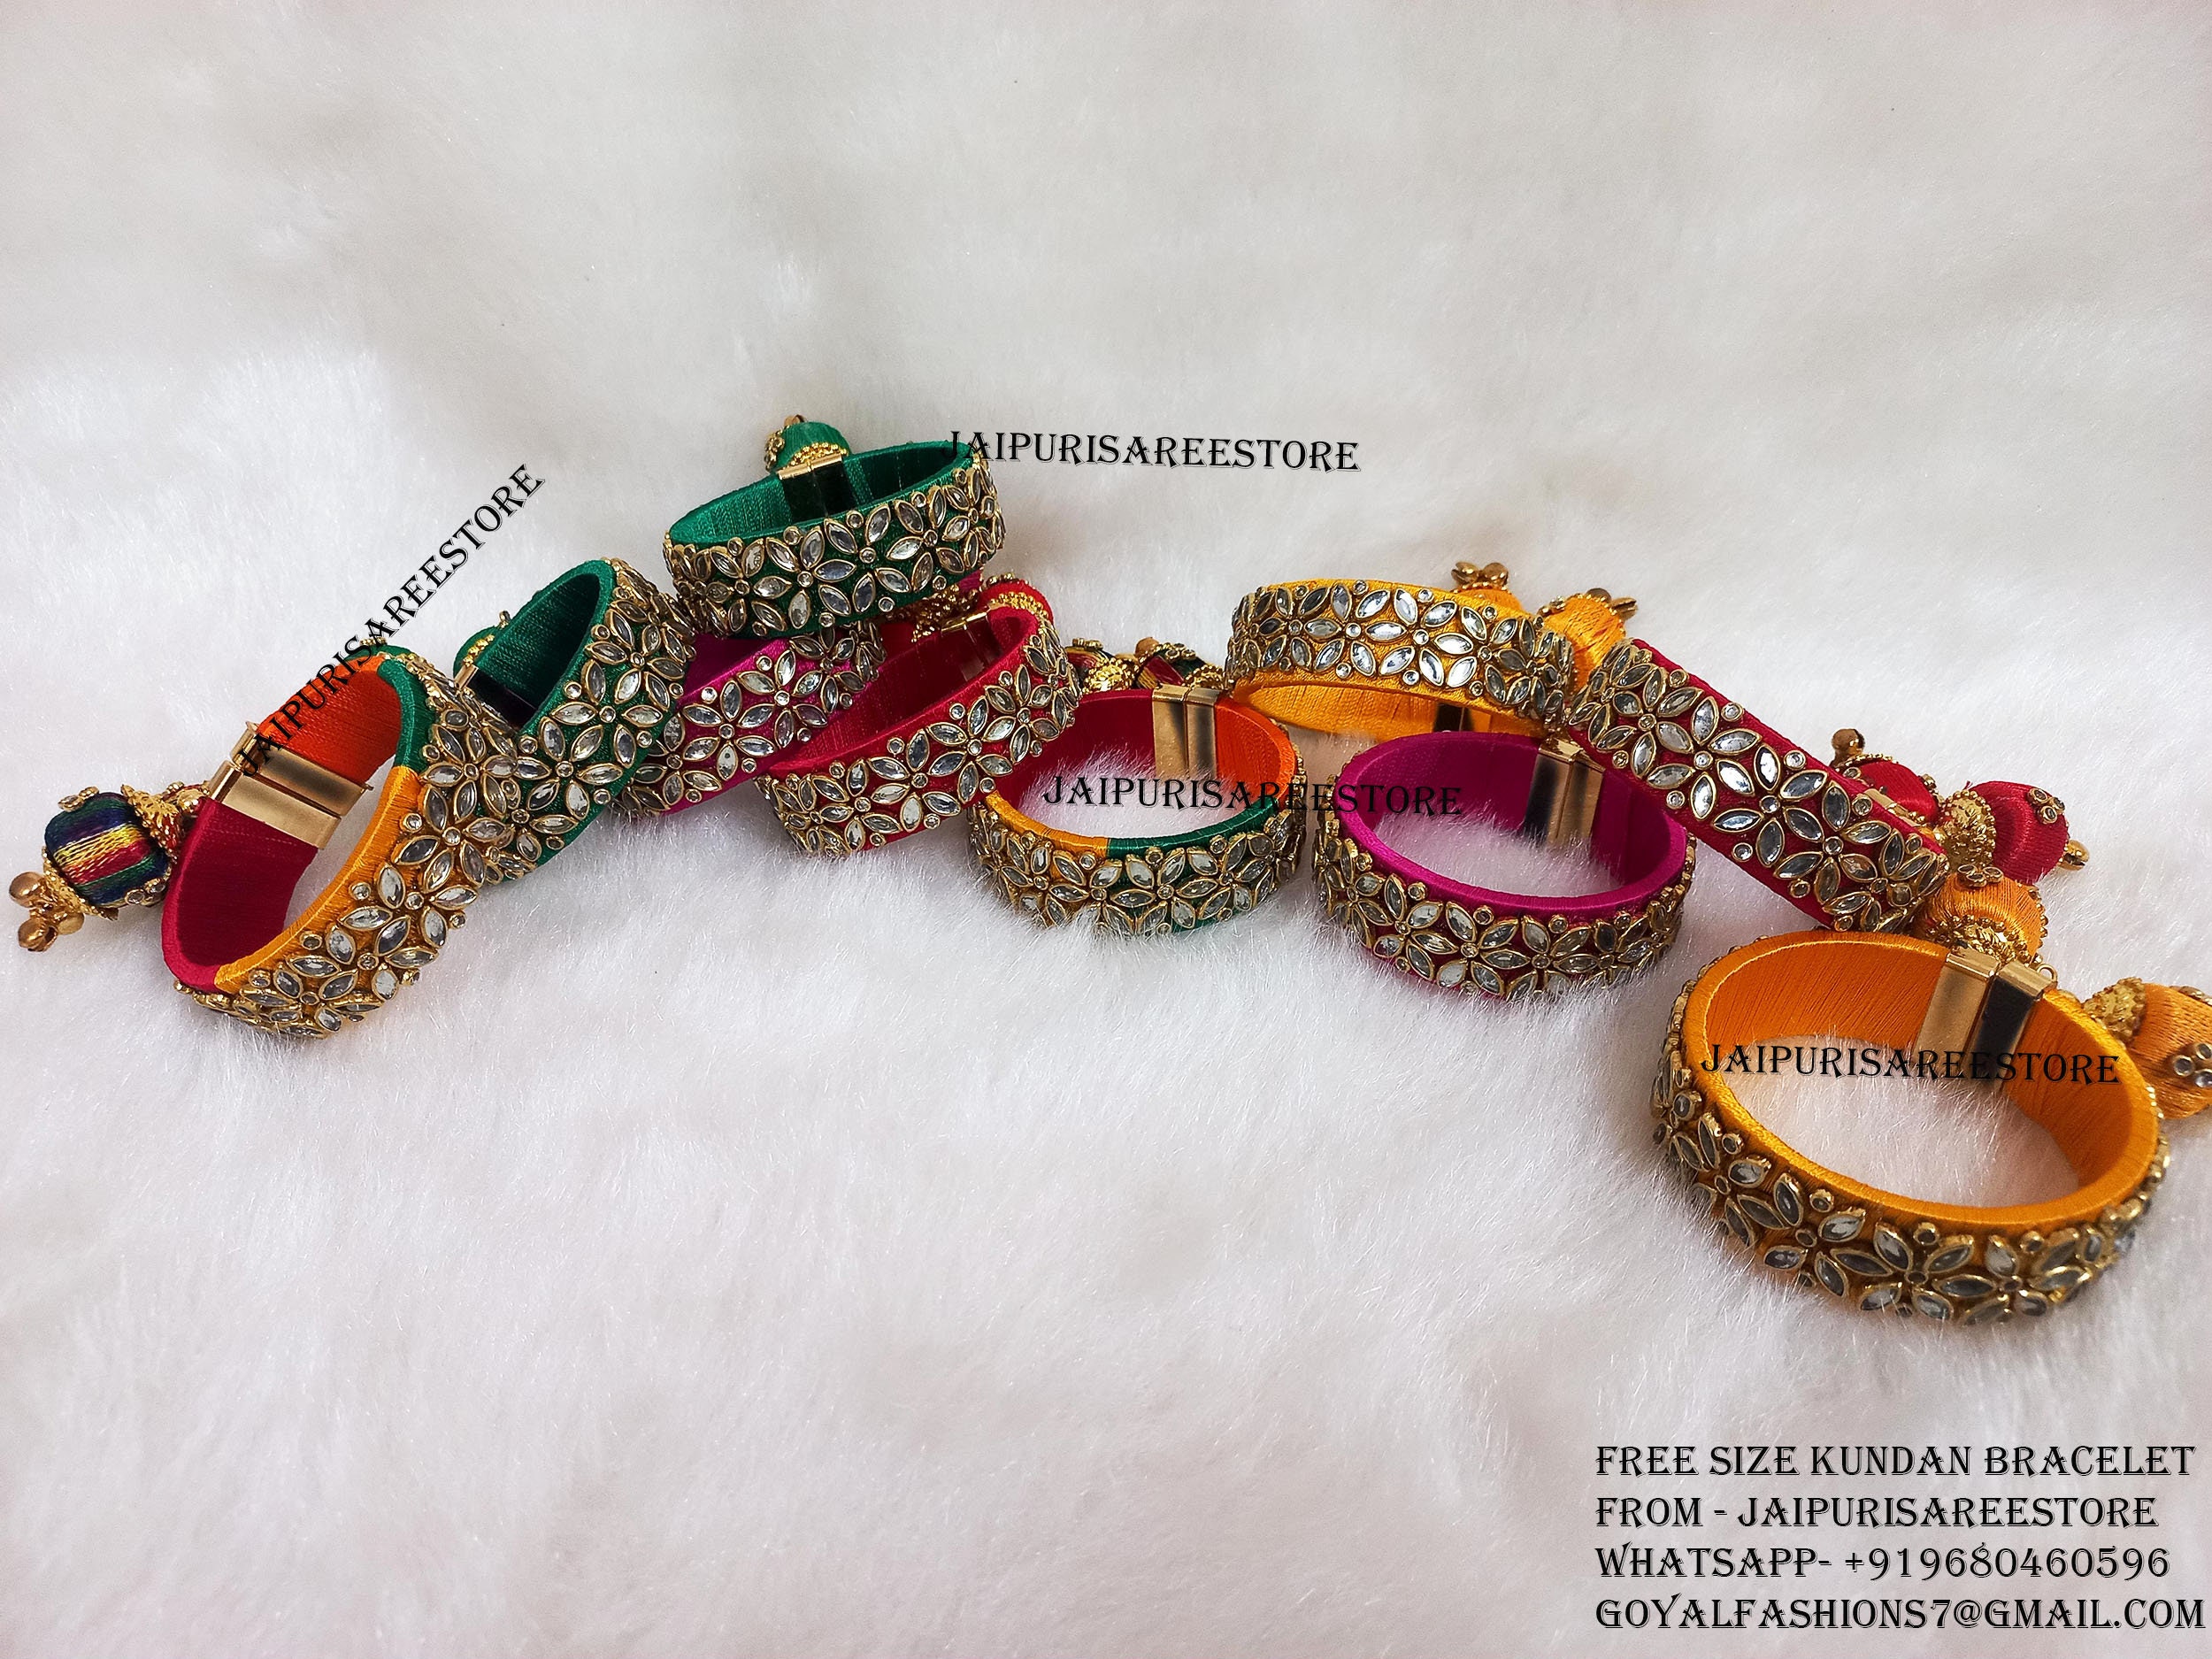 Personalised Bangle Cuff Bracelets for Women,engraved Bracelet